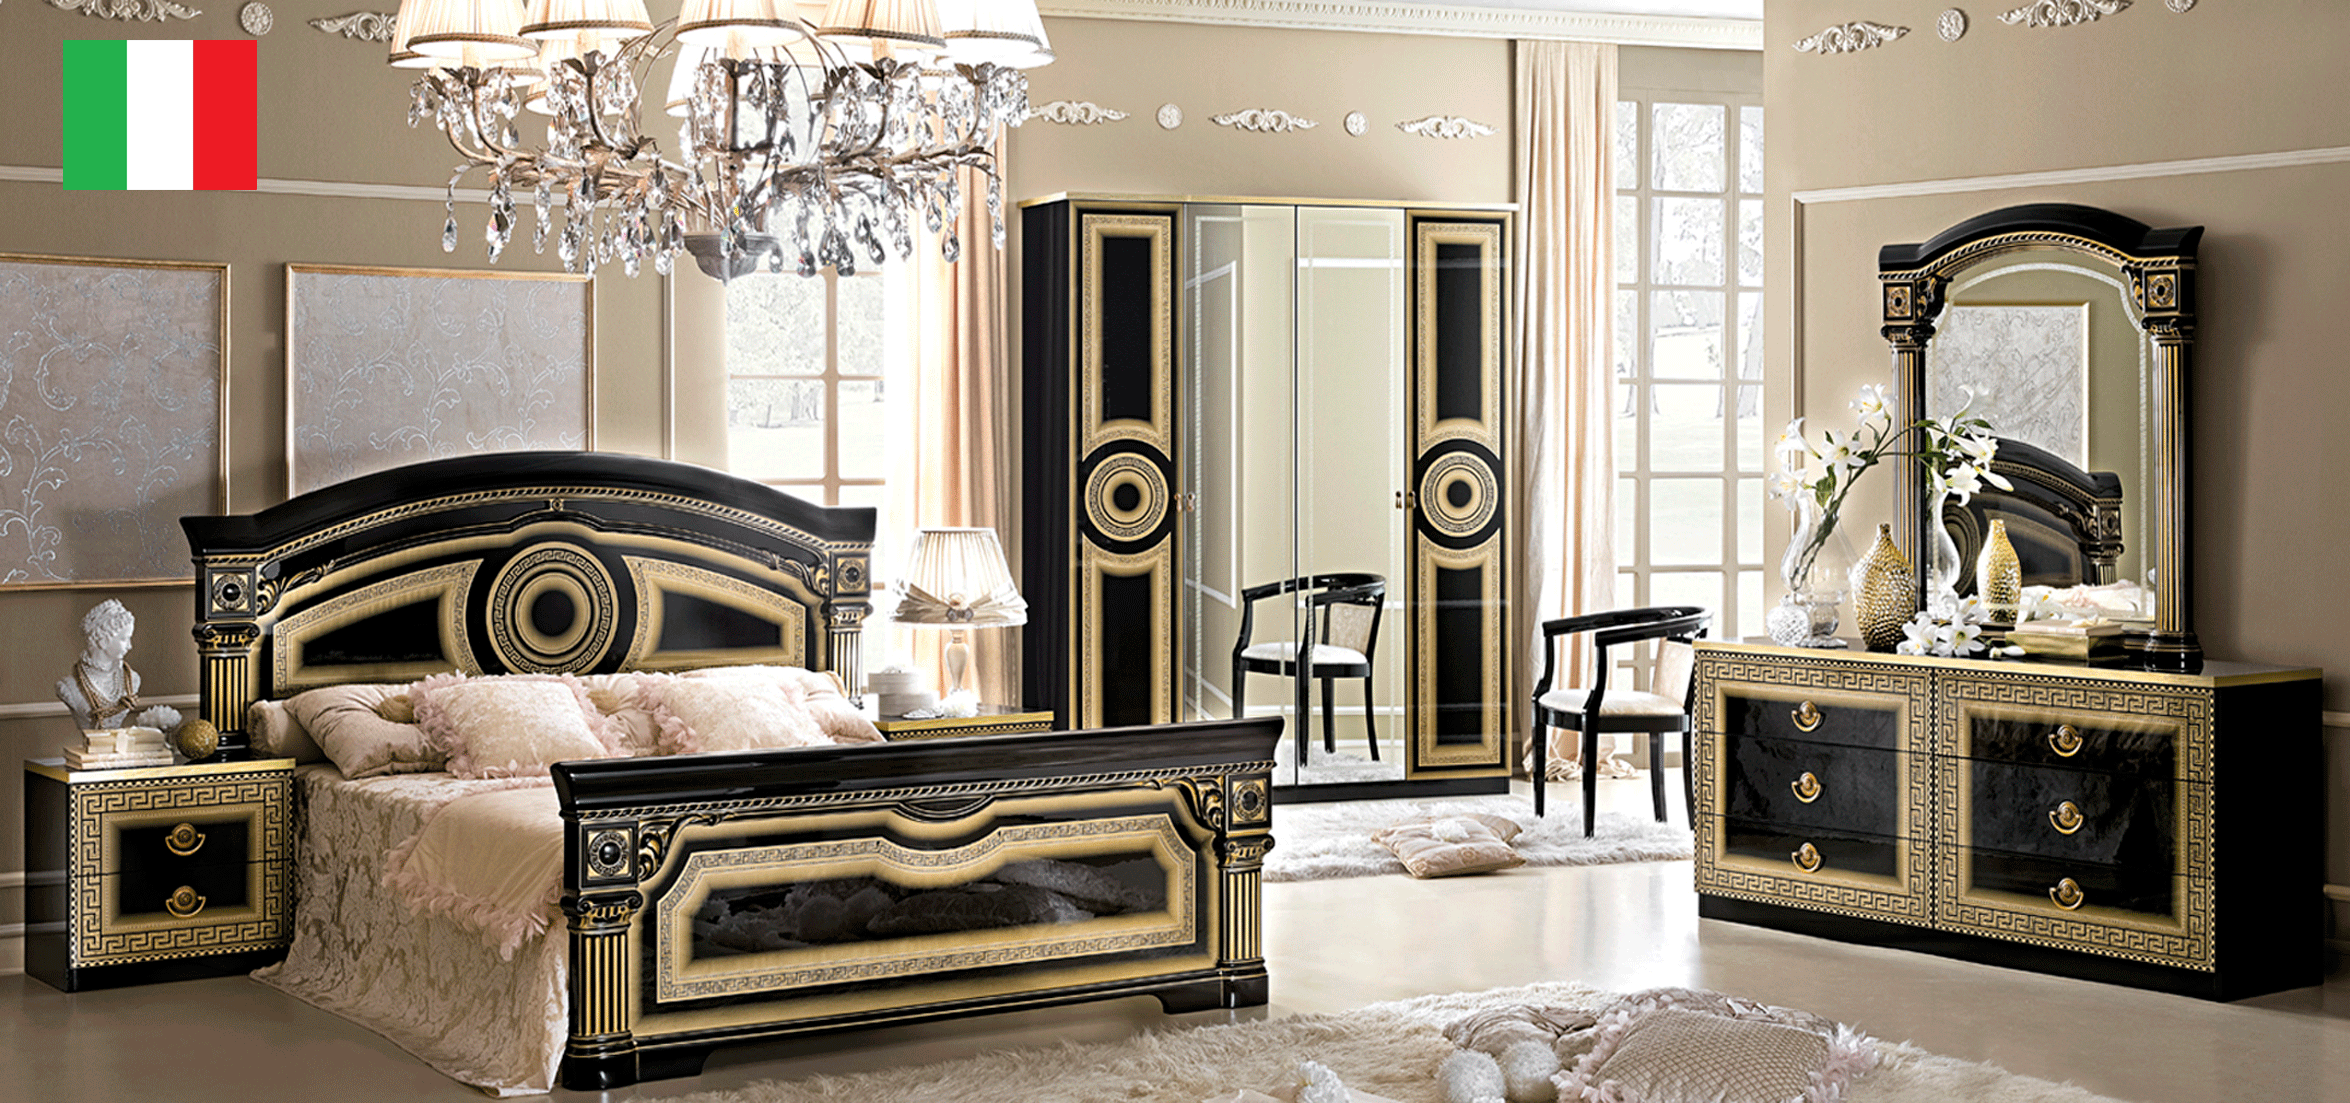 Brands Garcia Sabate, Modern Bedroom Spain Aida Bedroom Black w/Gold, Camelgroup Italy